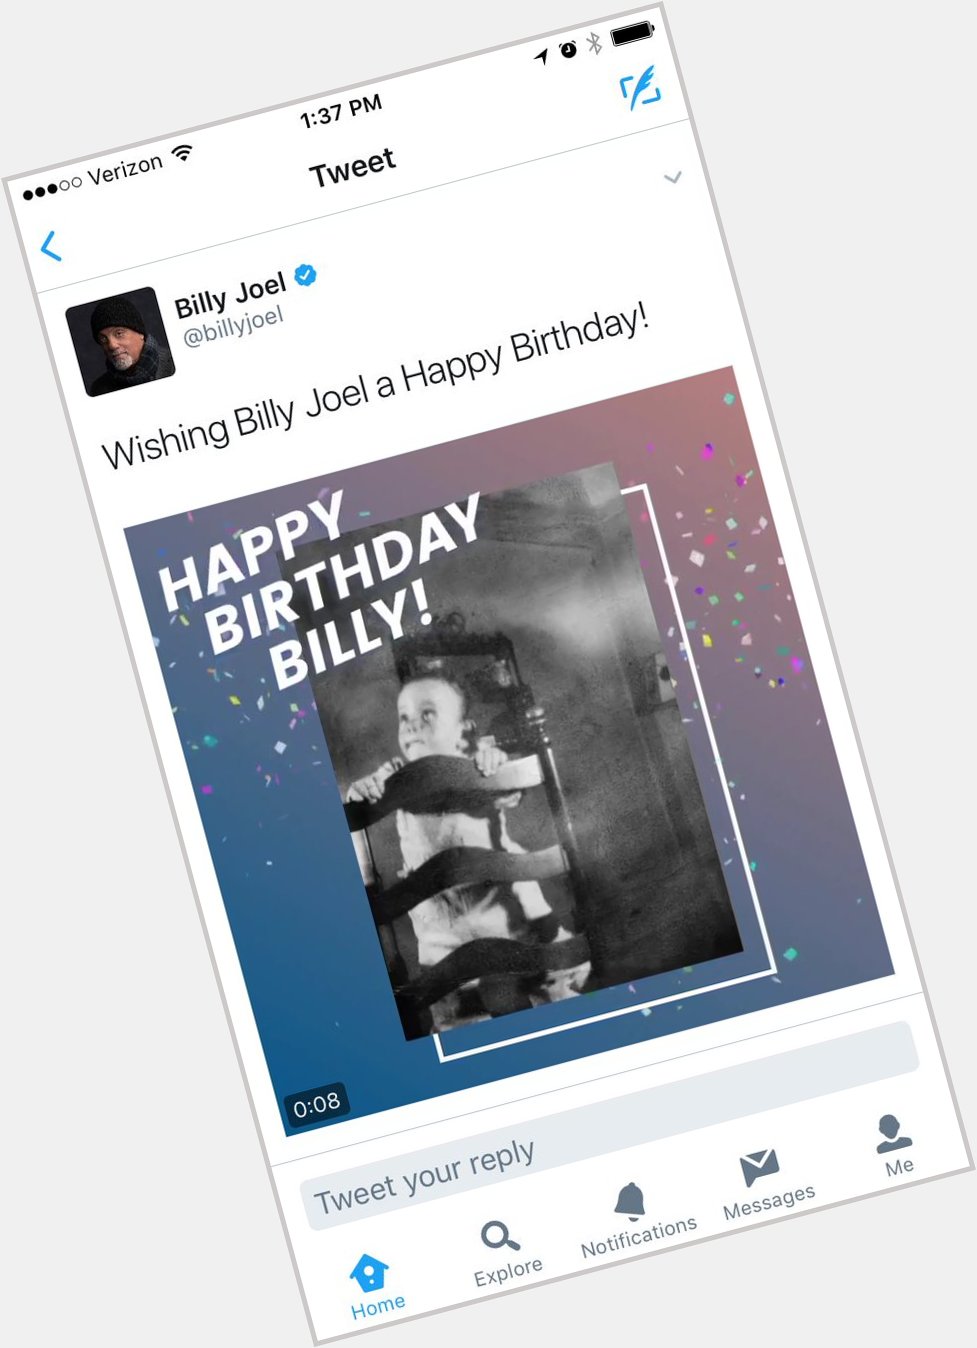 .... did Billy Joel just wish Billy Joel a happy birthday? 